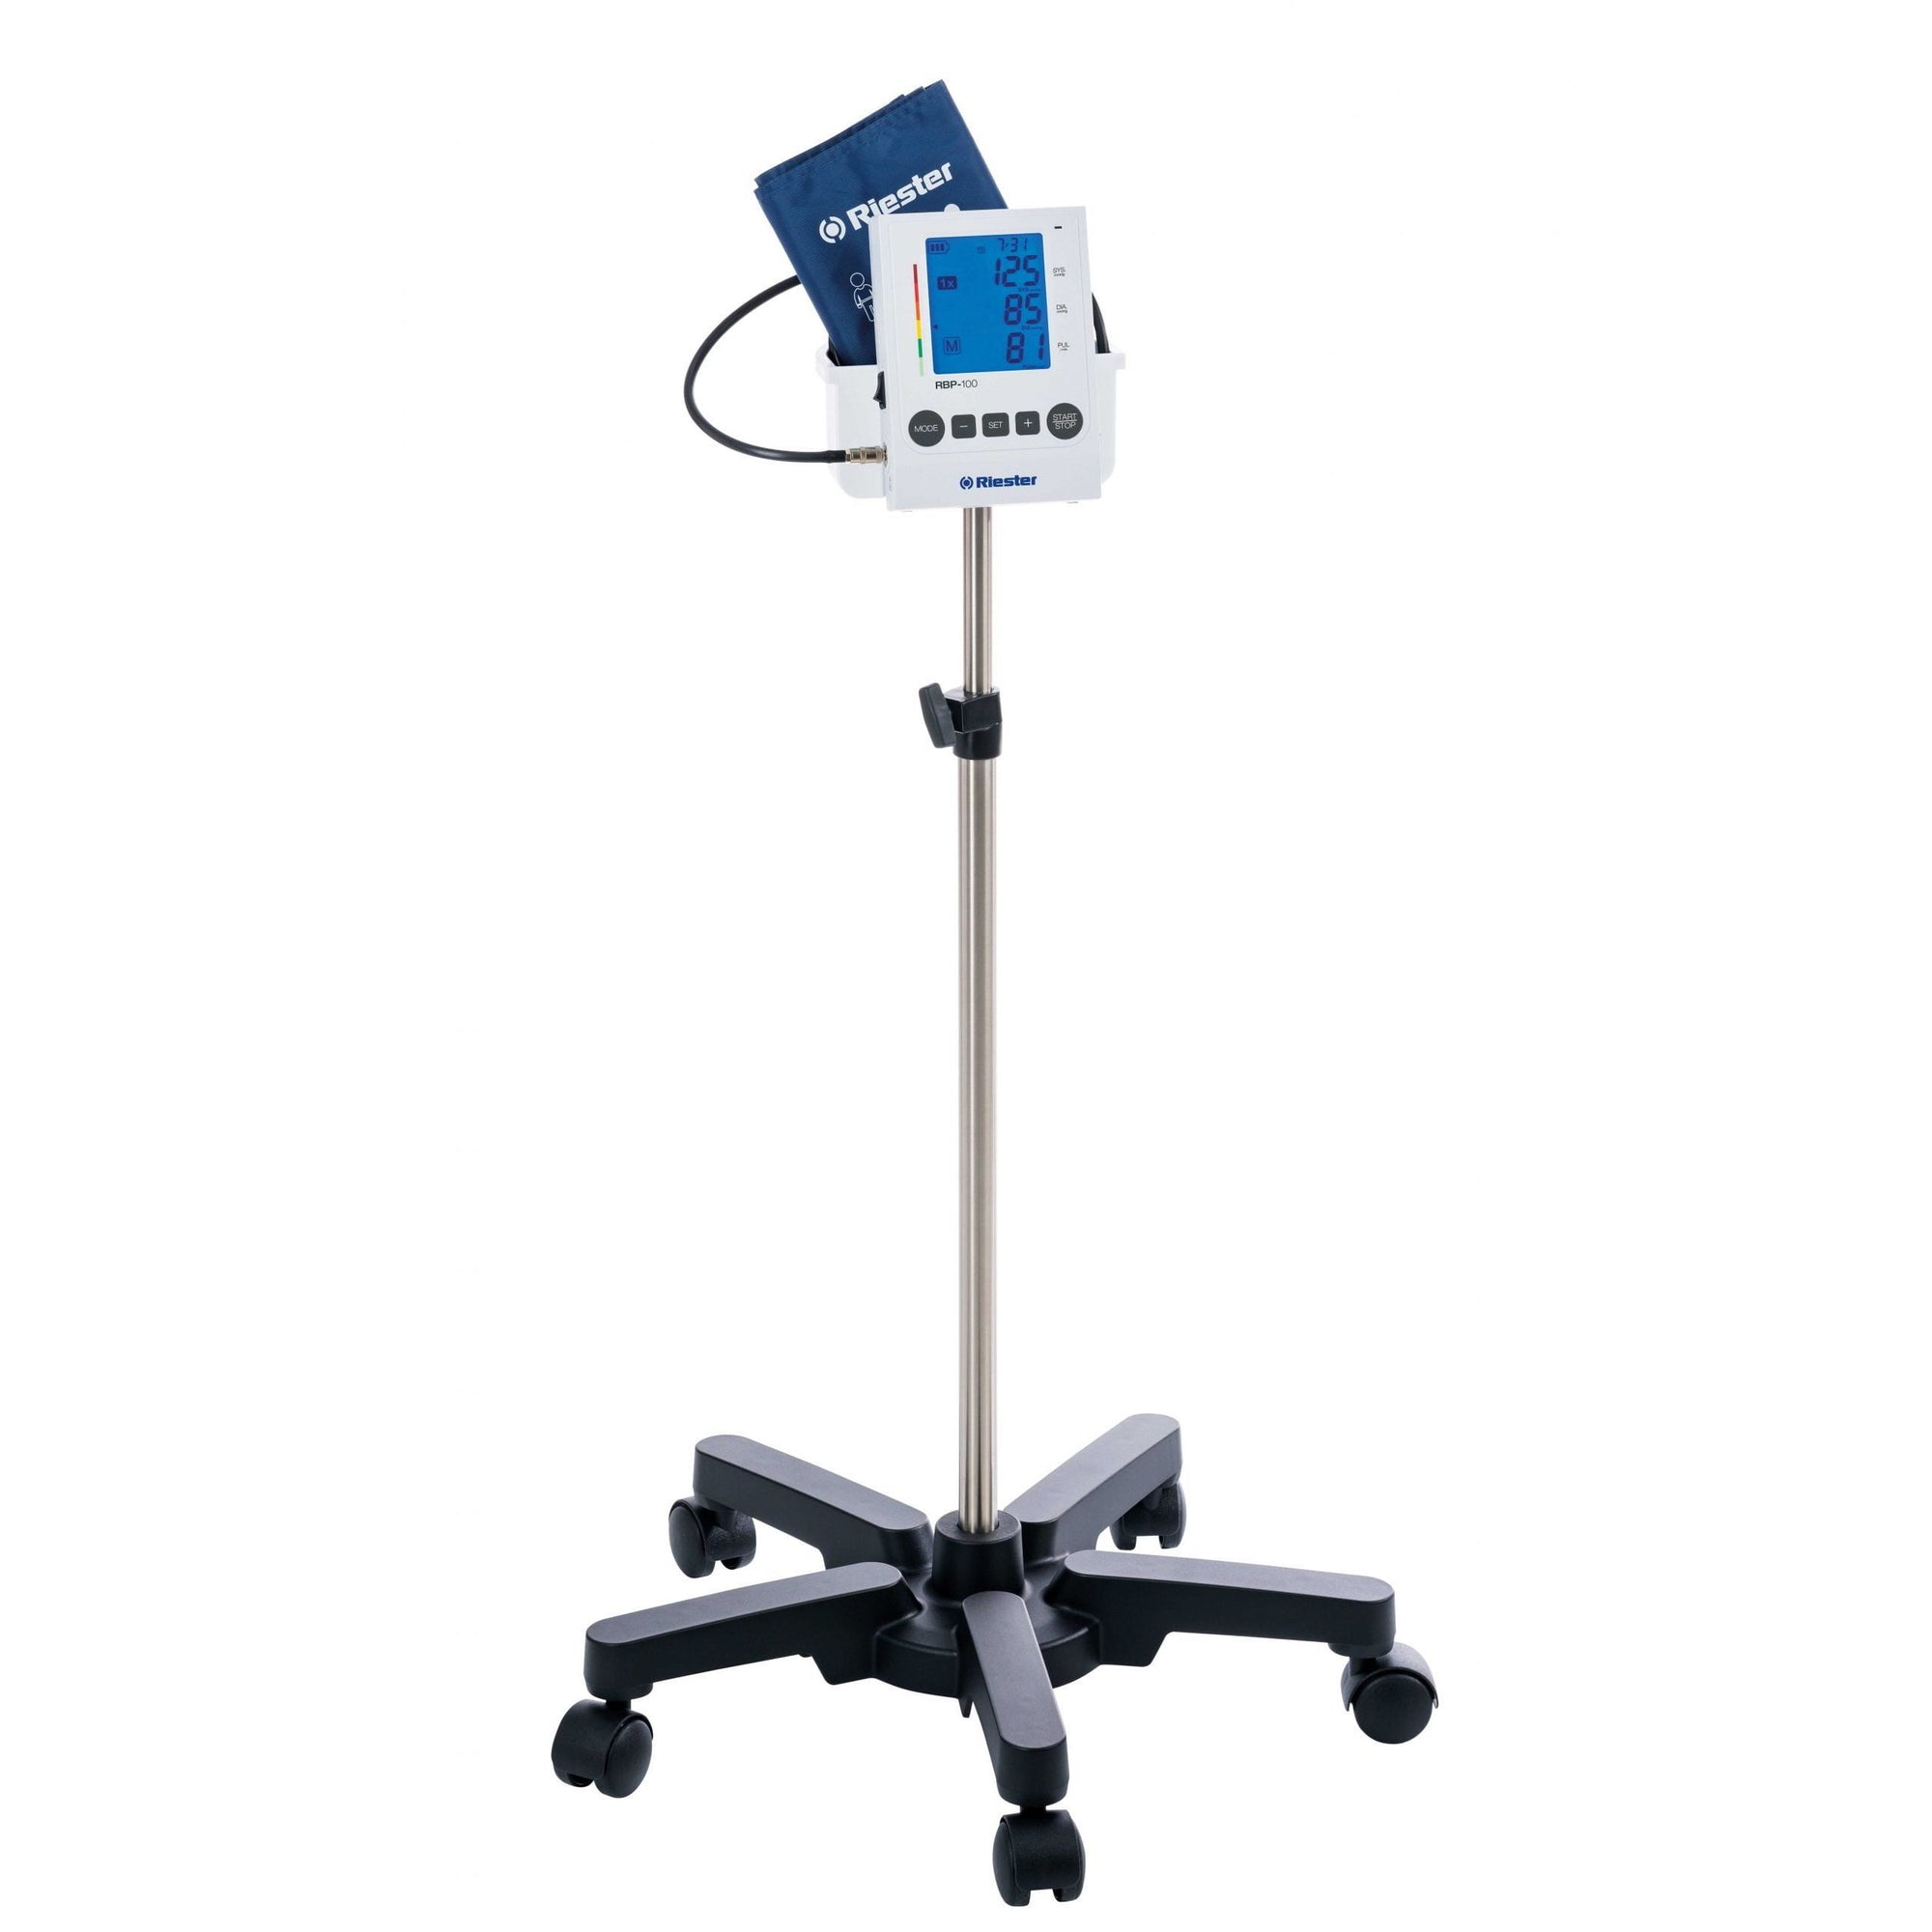 Riester RBP-100 Digital Blood Pressure Monitor